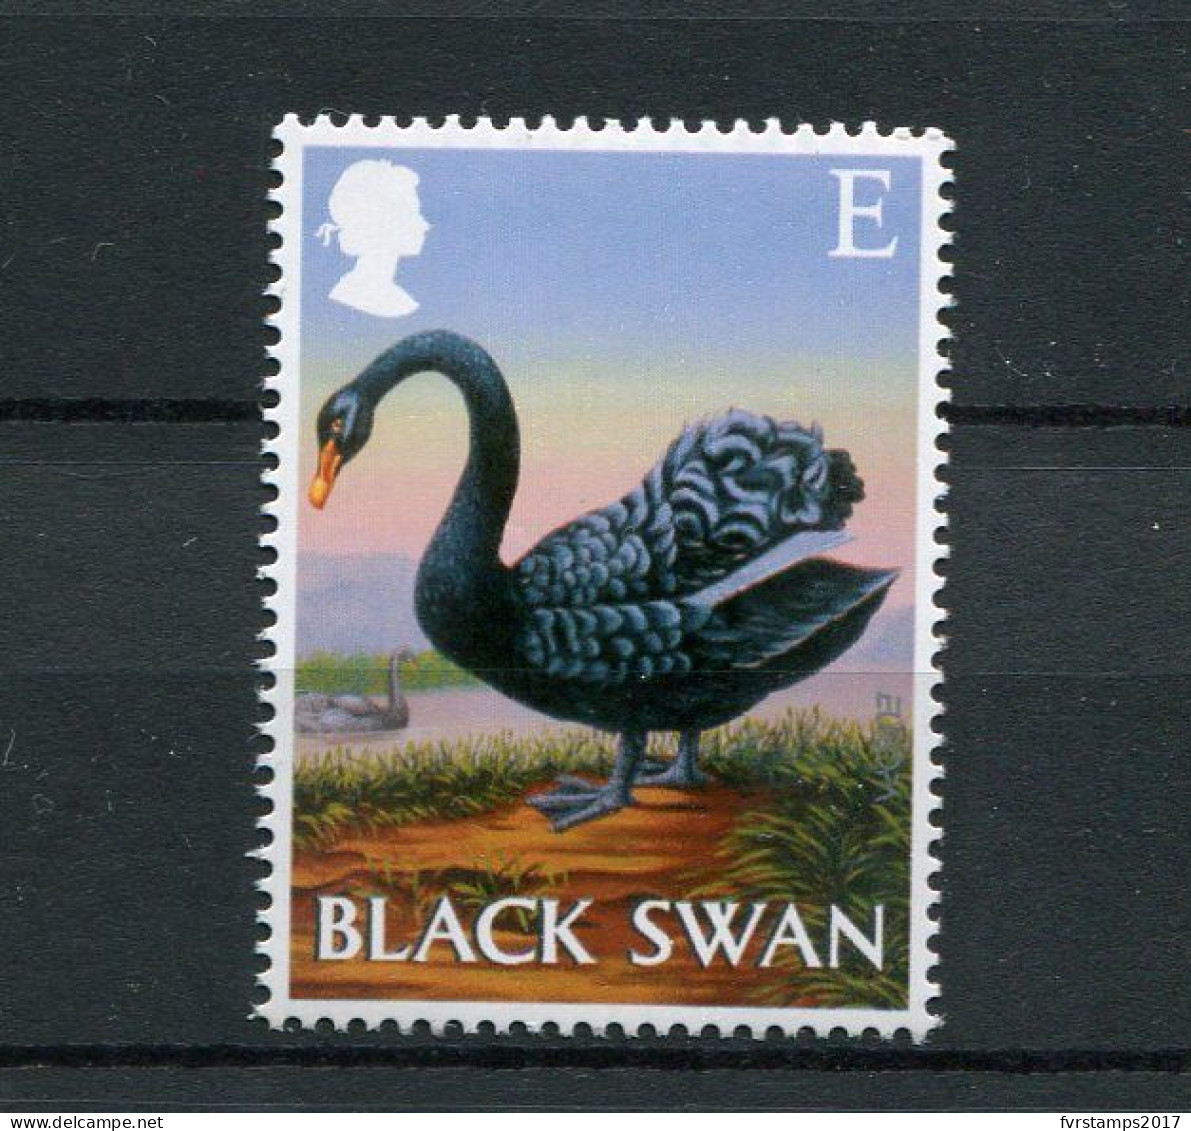 UK Great Britain - 2003 - Mi 2148 - MNH ** - Black Swan - Birds Vogels Oiseaux Fauna - Swans